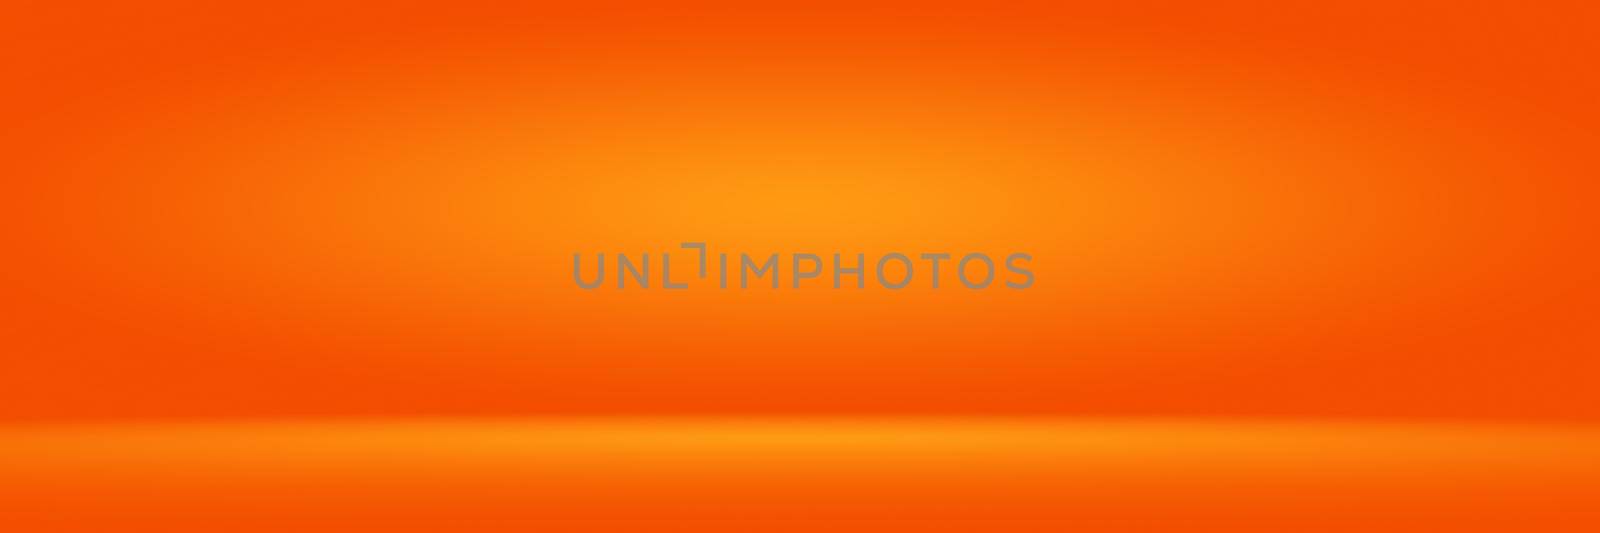 Orange photographic studio background vertical with soft vignette. Soft gradient background. Painted canvas studio backdrop. by Benzoix